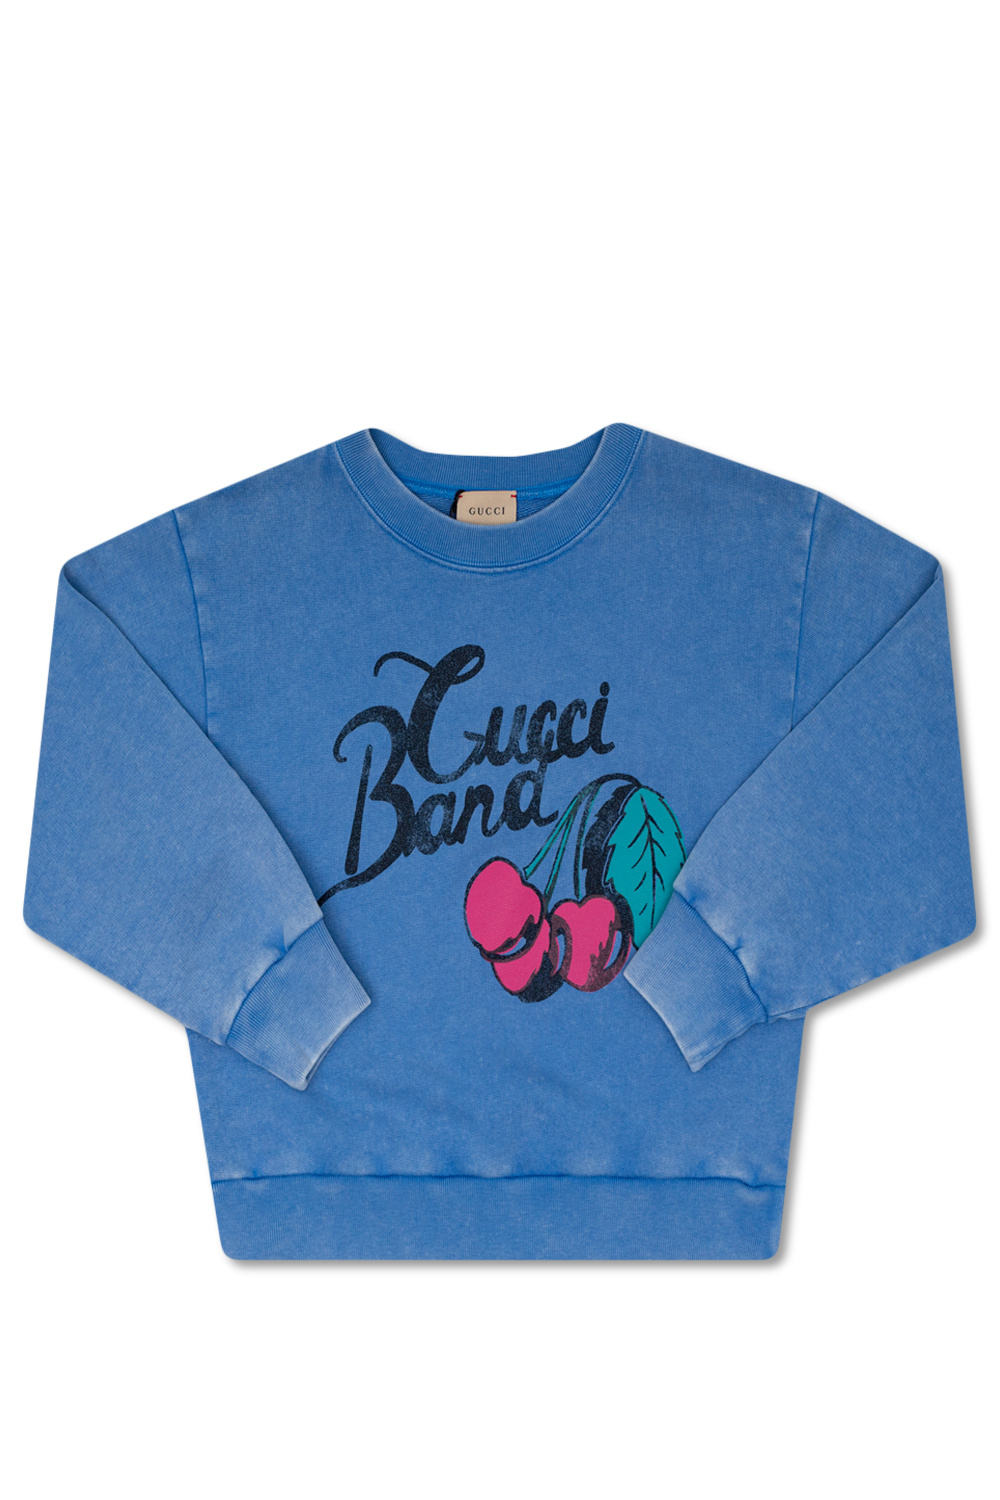 gucci Interlocking Kids Printed sweatshirt